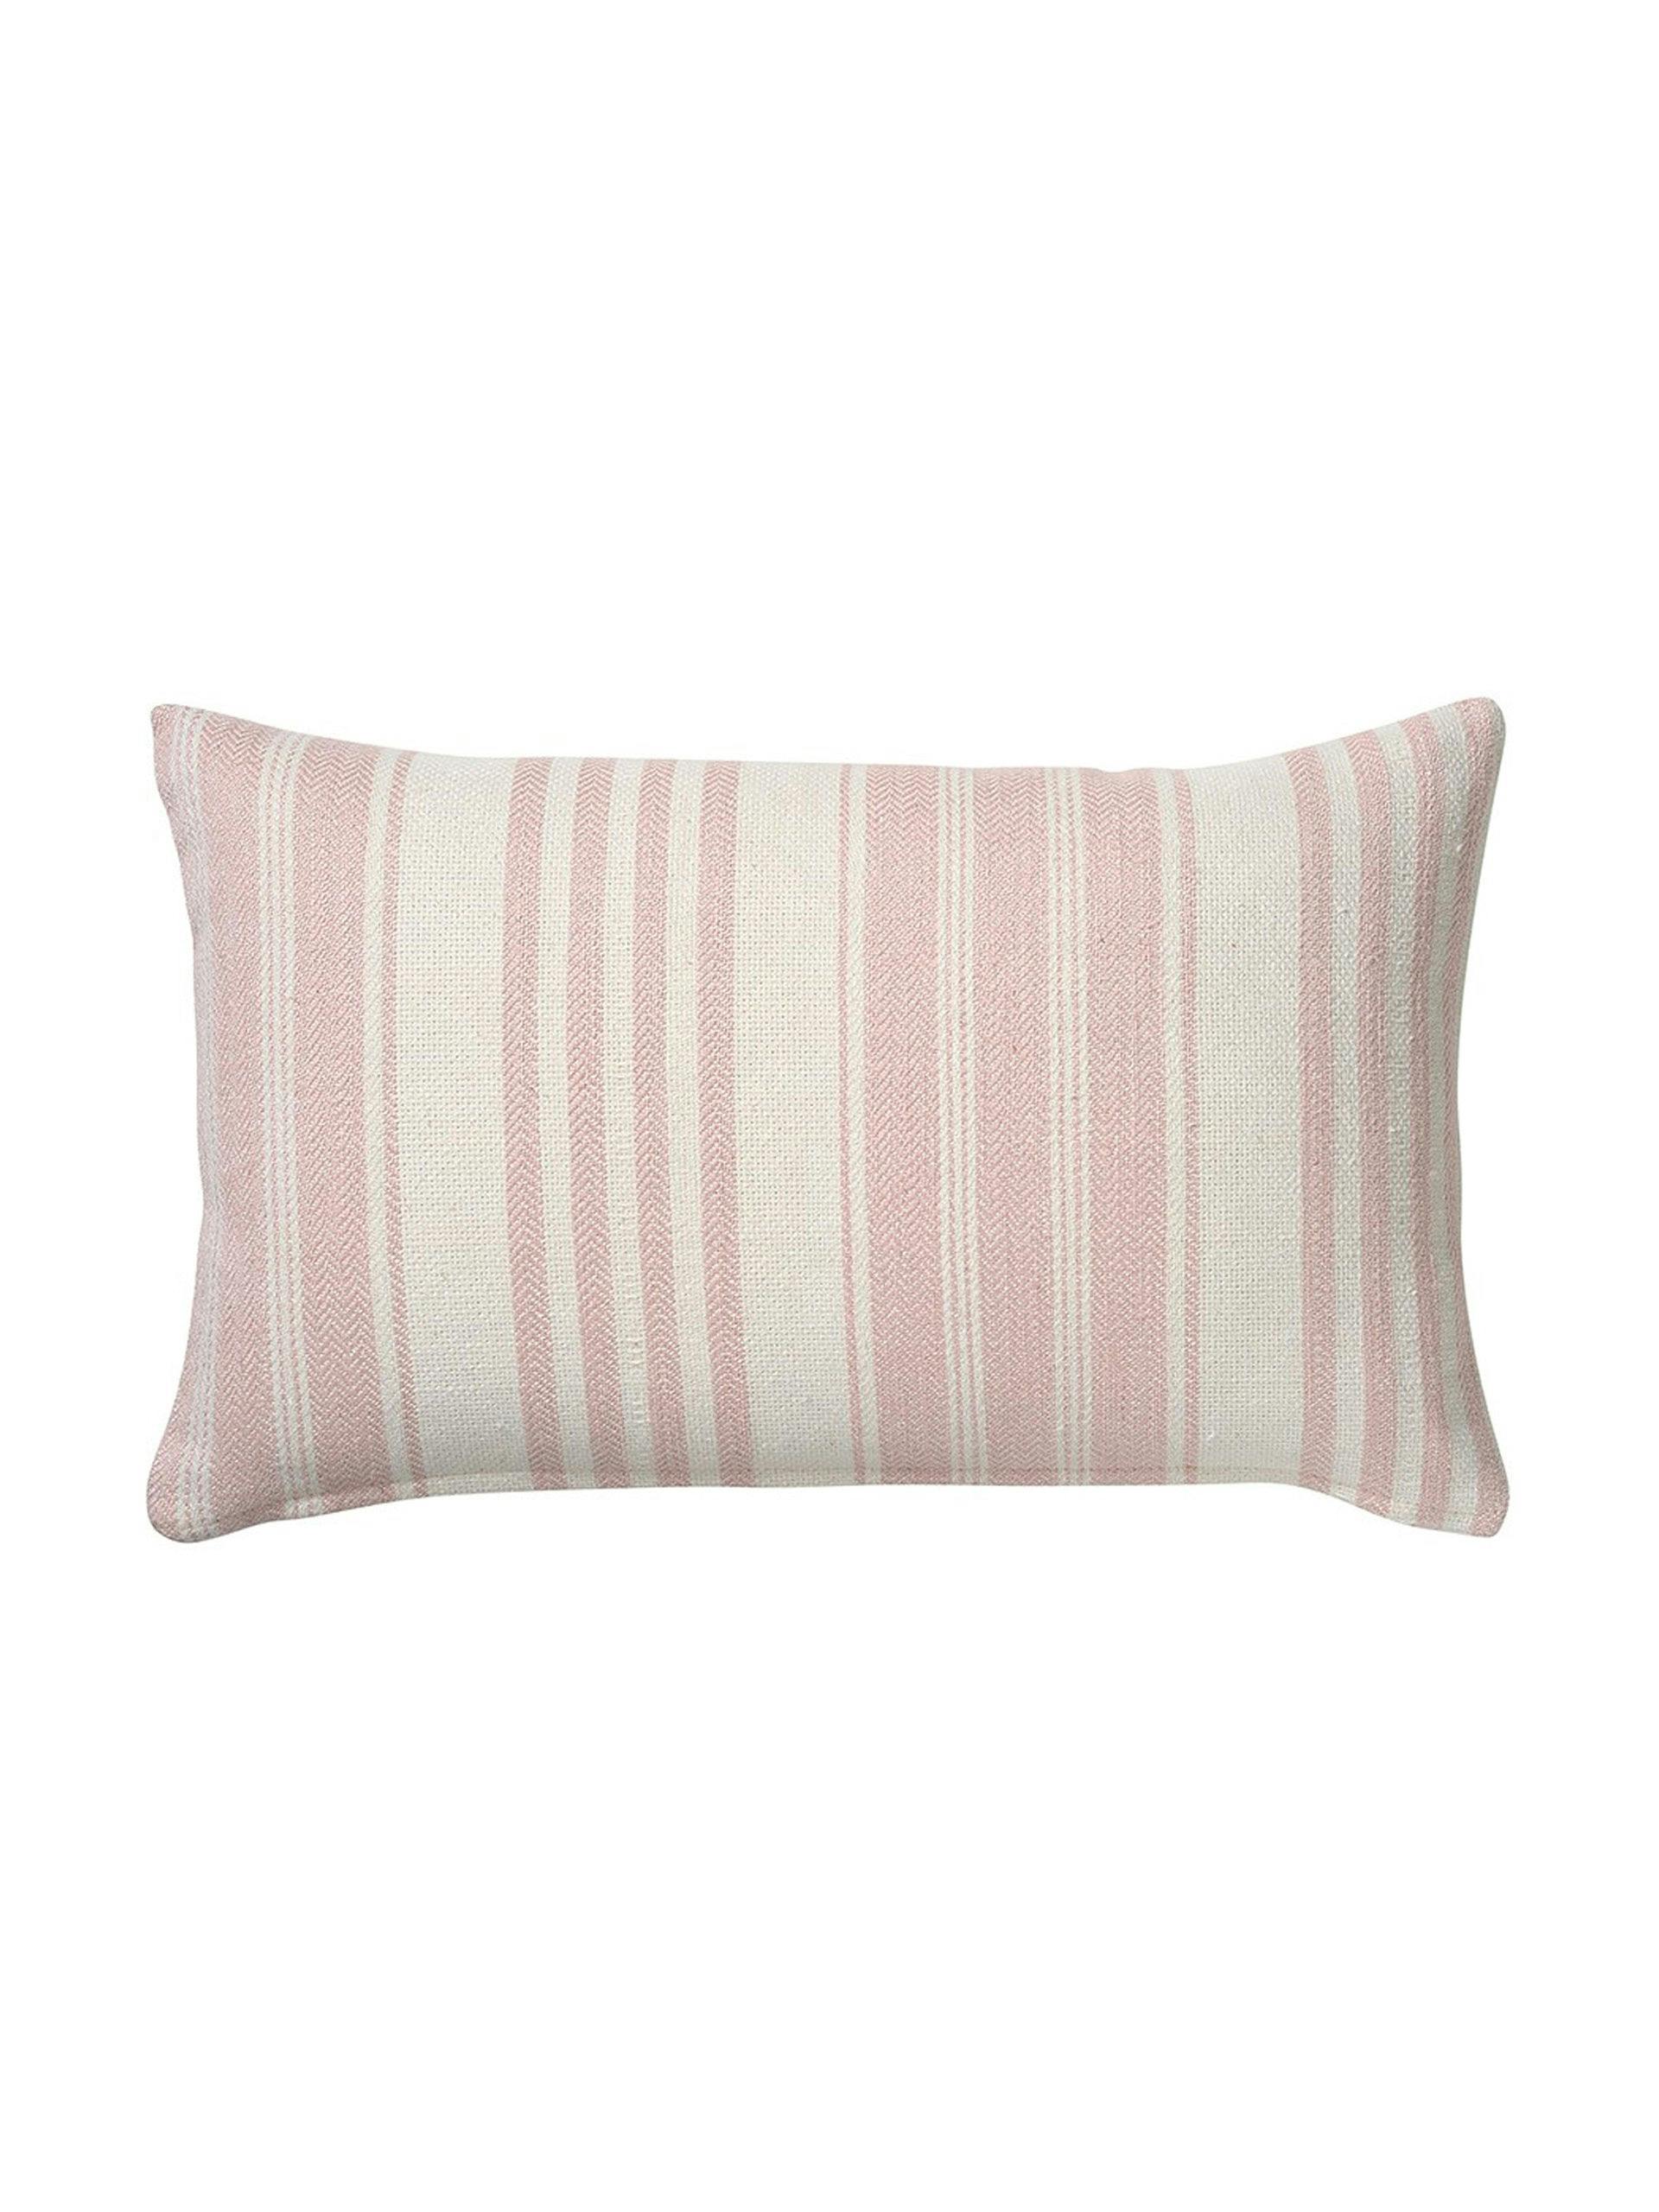 Natural stripe blush cushion